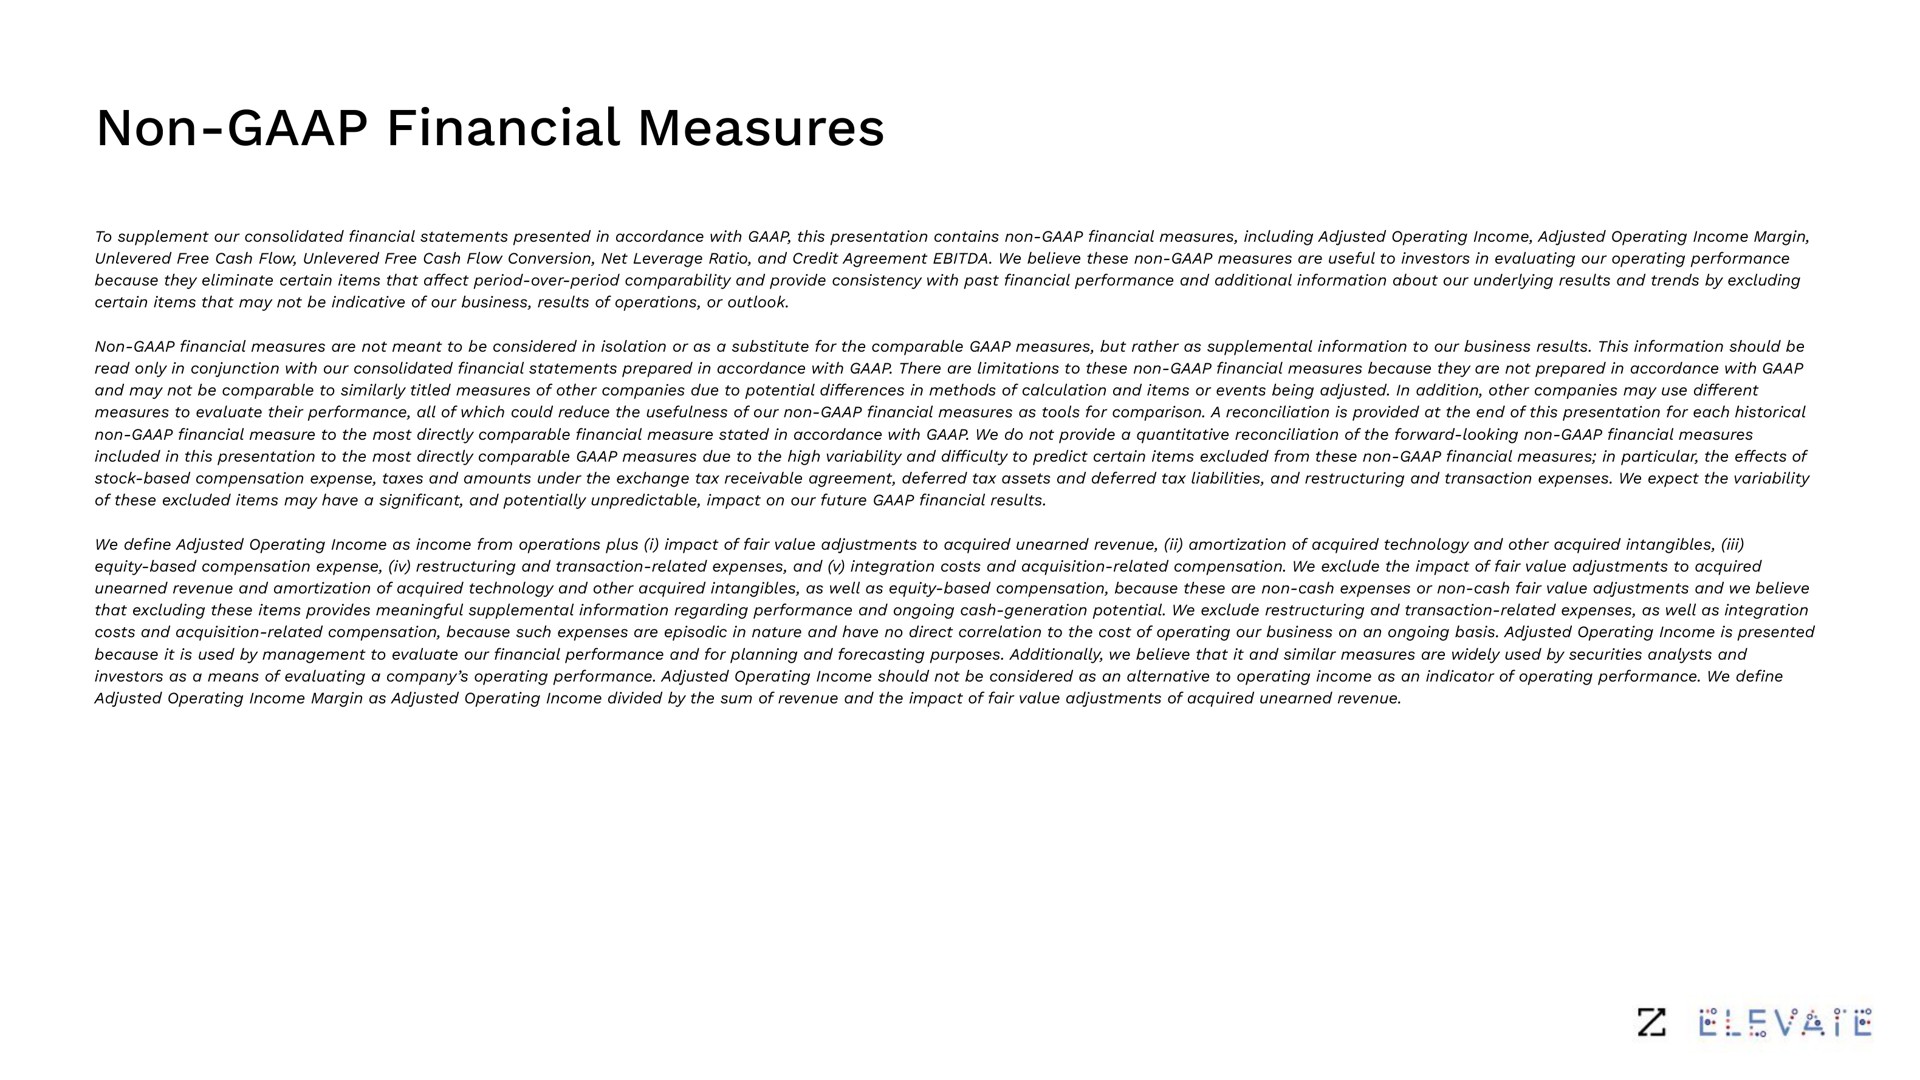 non financial measures | Zoominfo